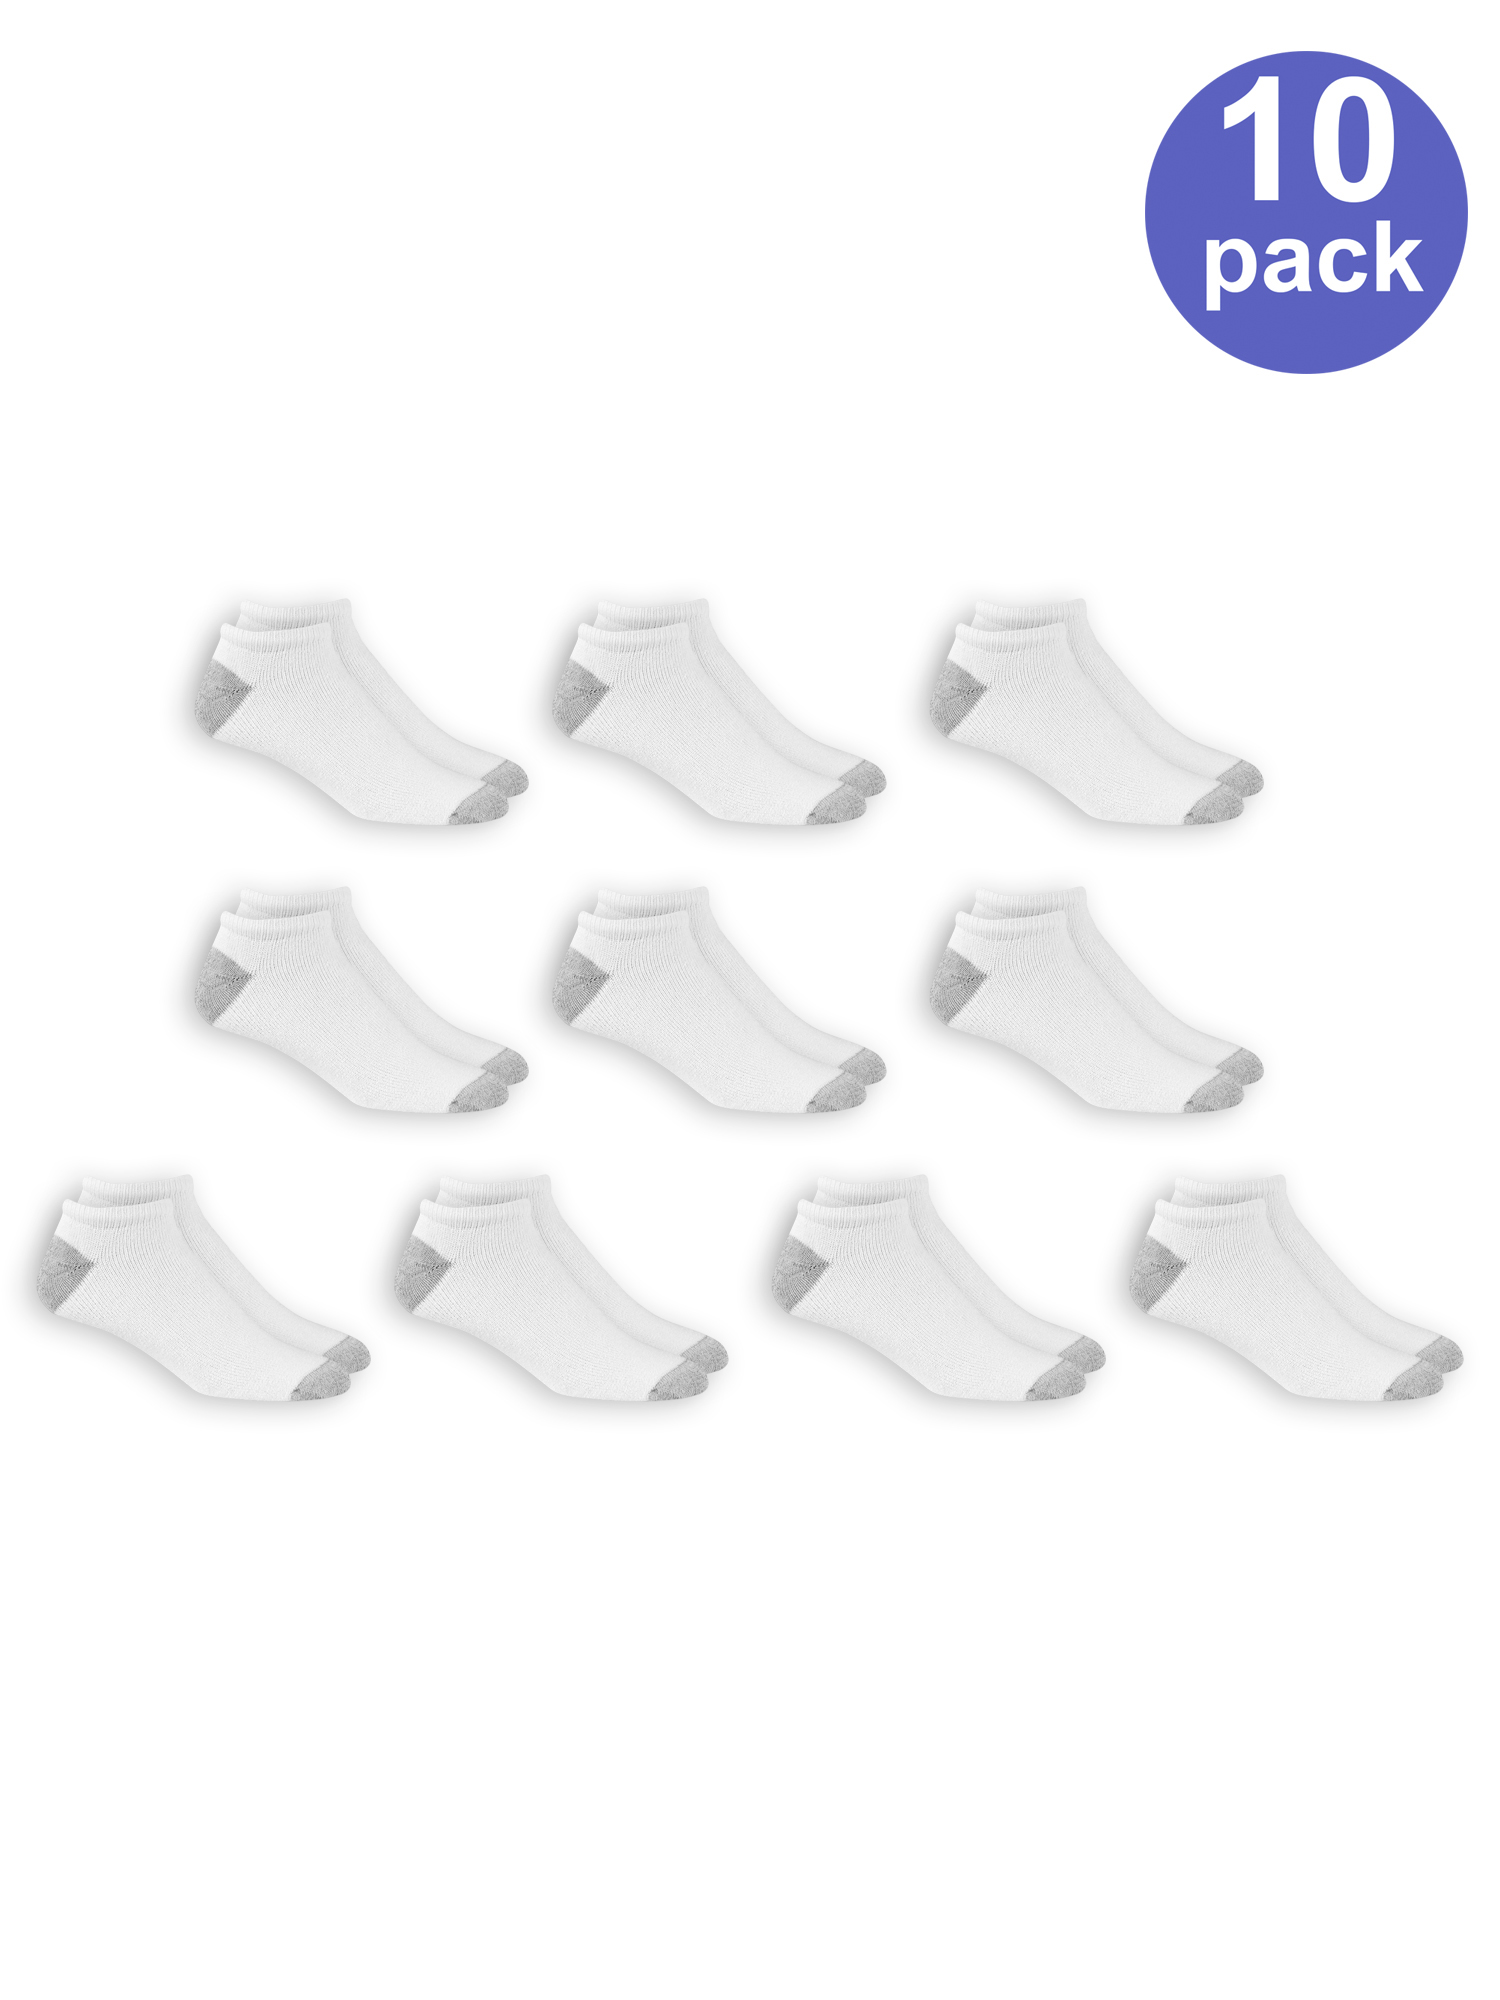 Men's No Show Socks 10 Pack - image 1 of 3